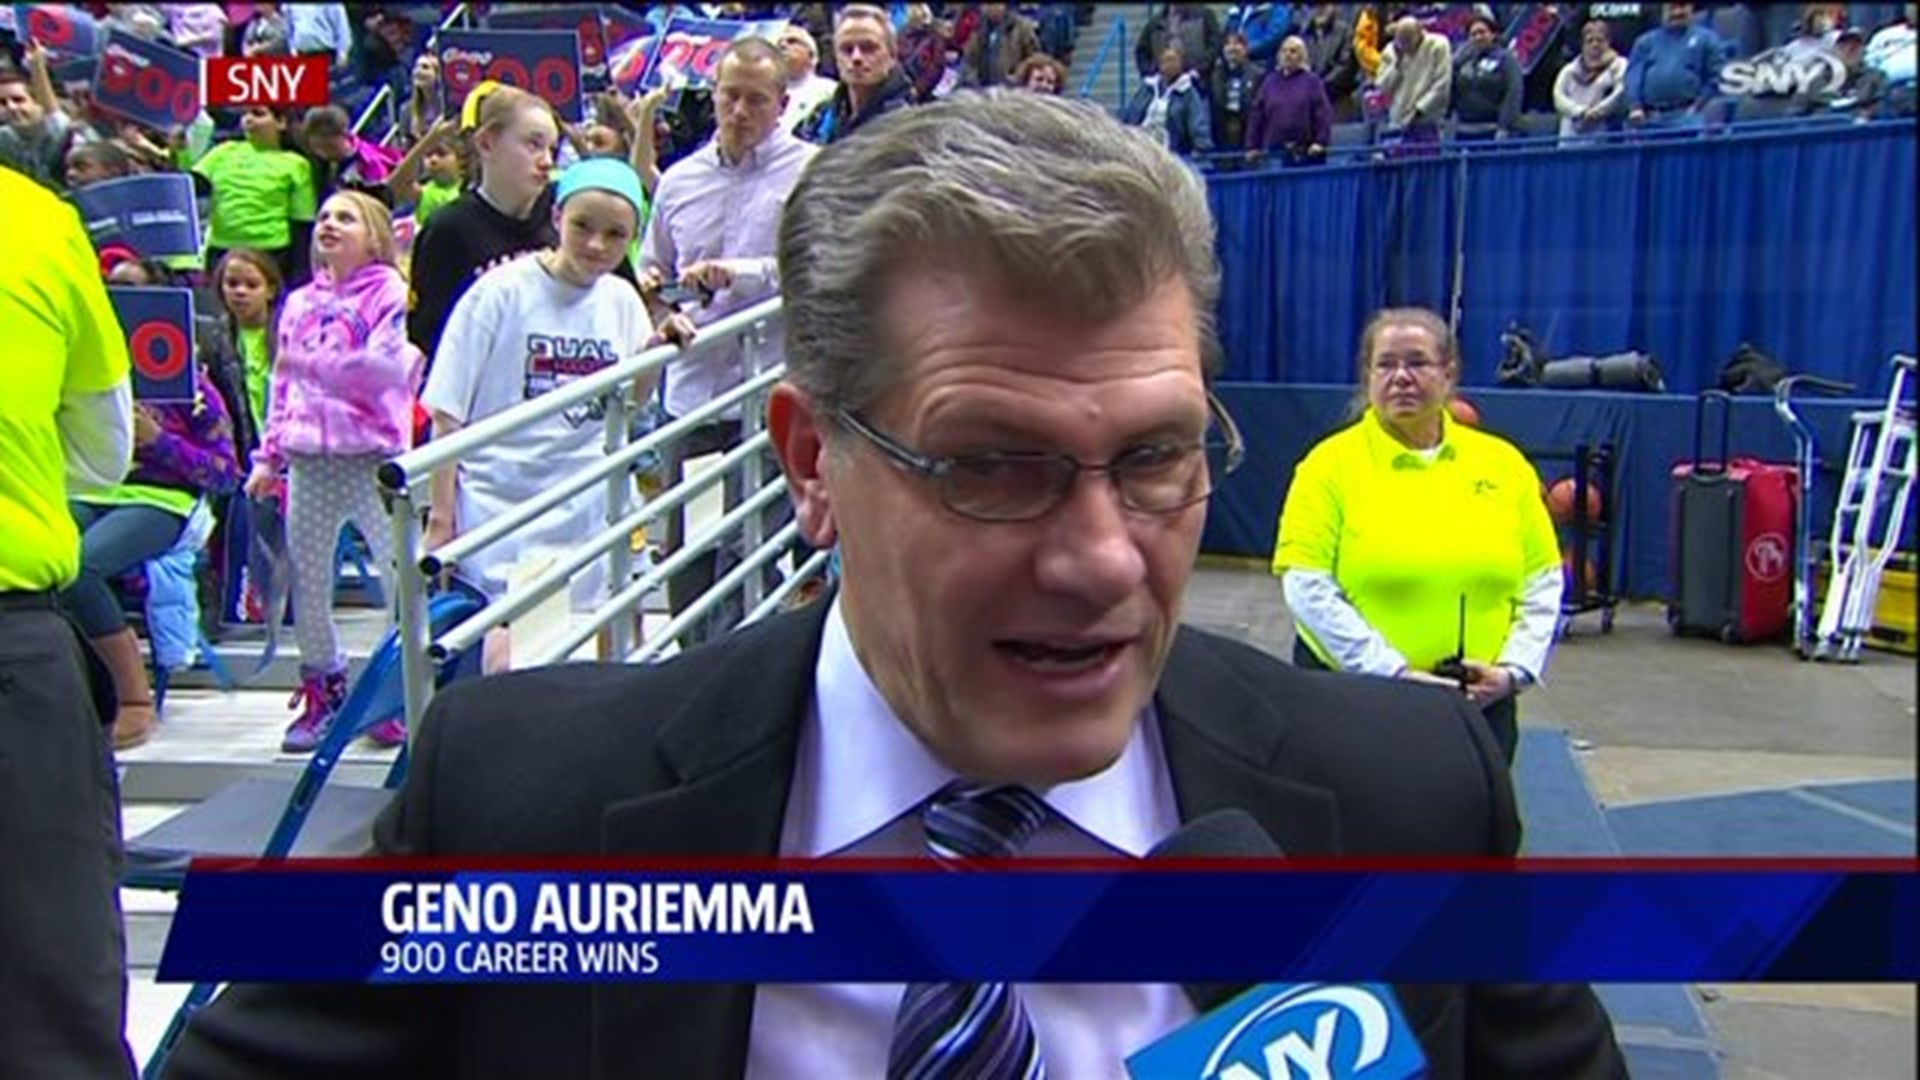 Geno Auriemma discusses his 900th win